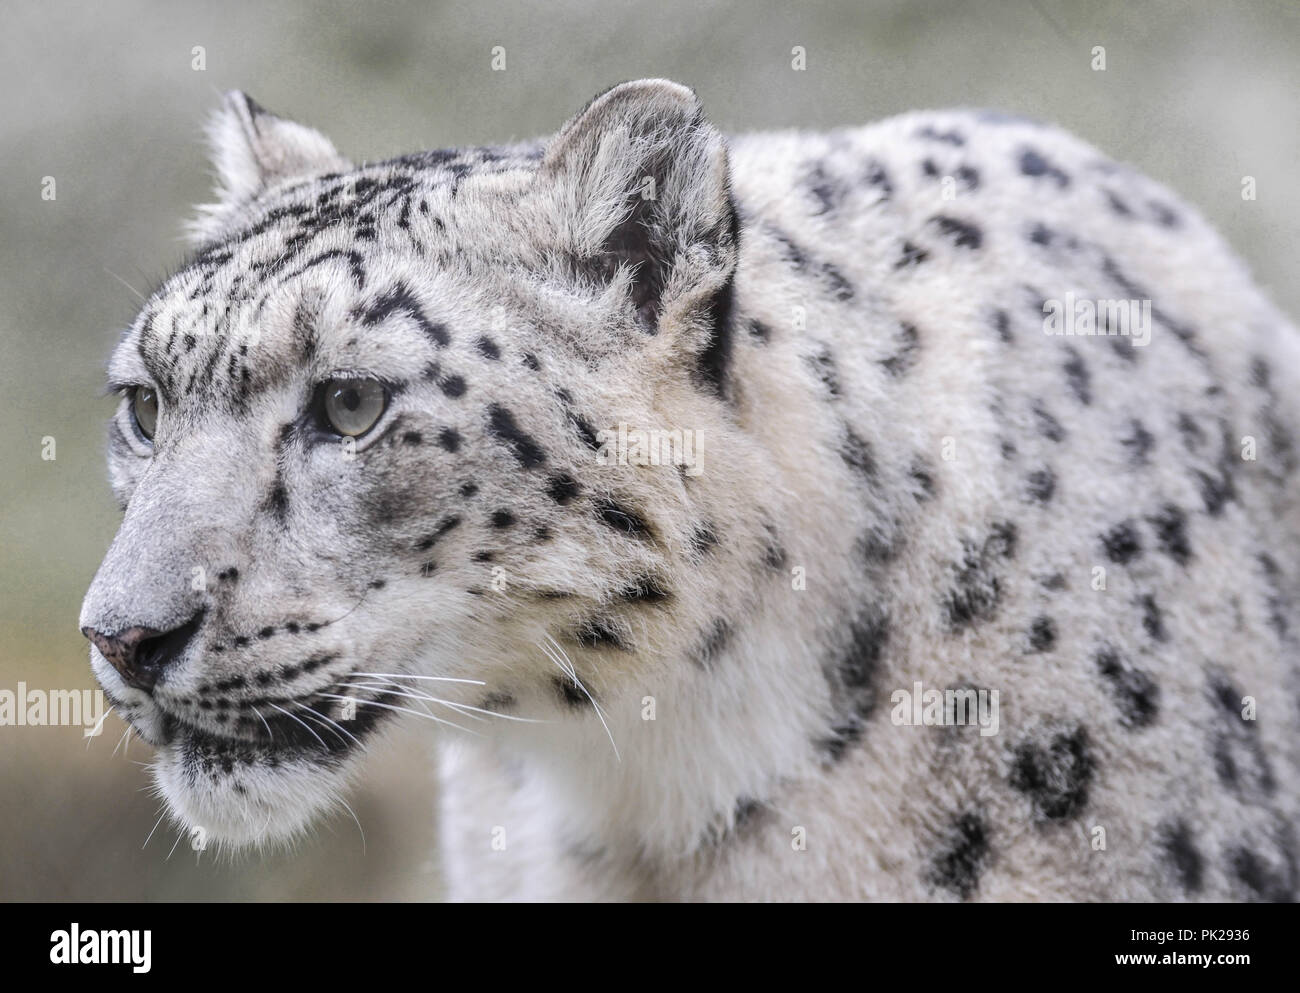 Closeup of a female snow leopard with an intense gaze Stock Photo